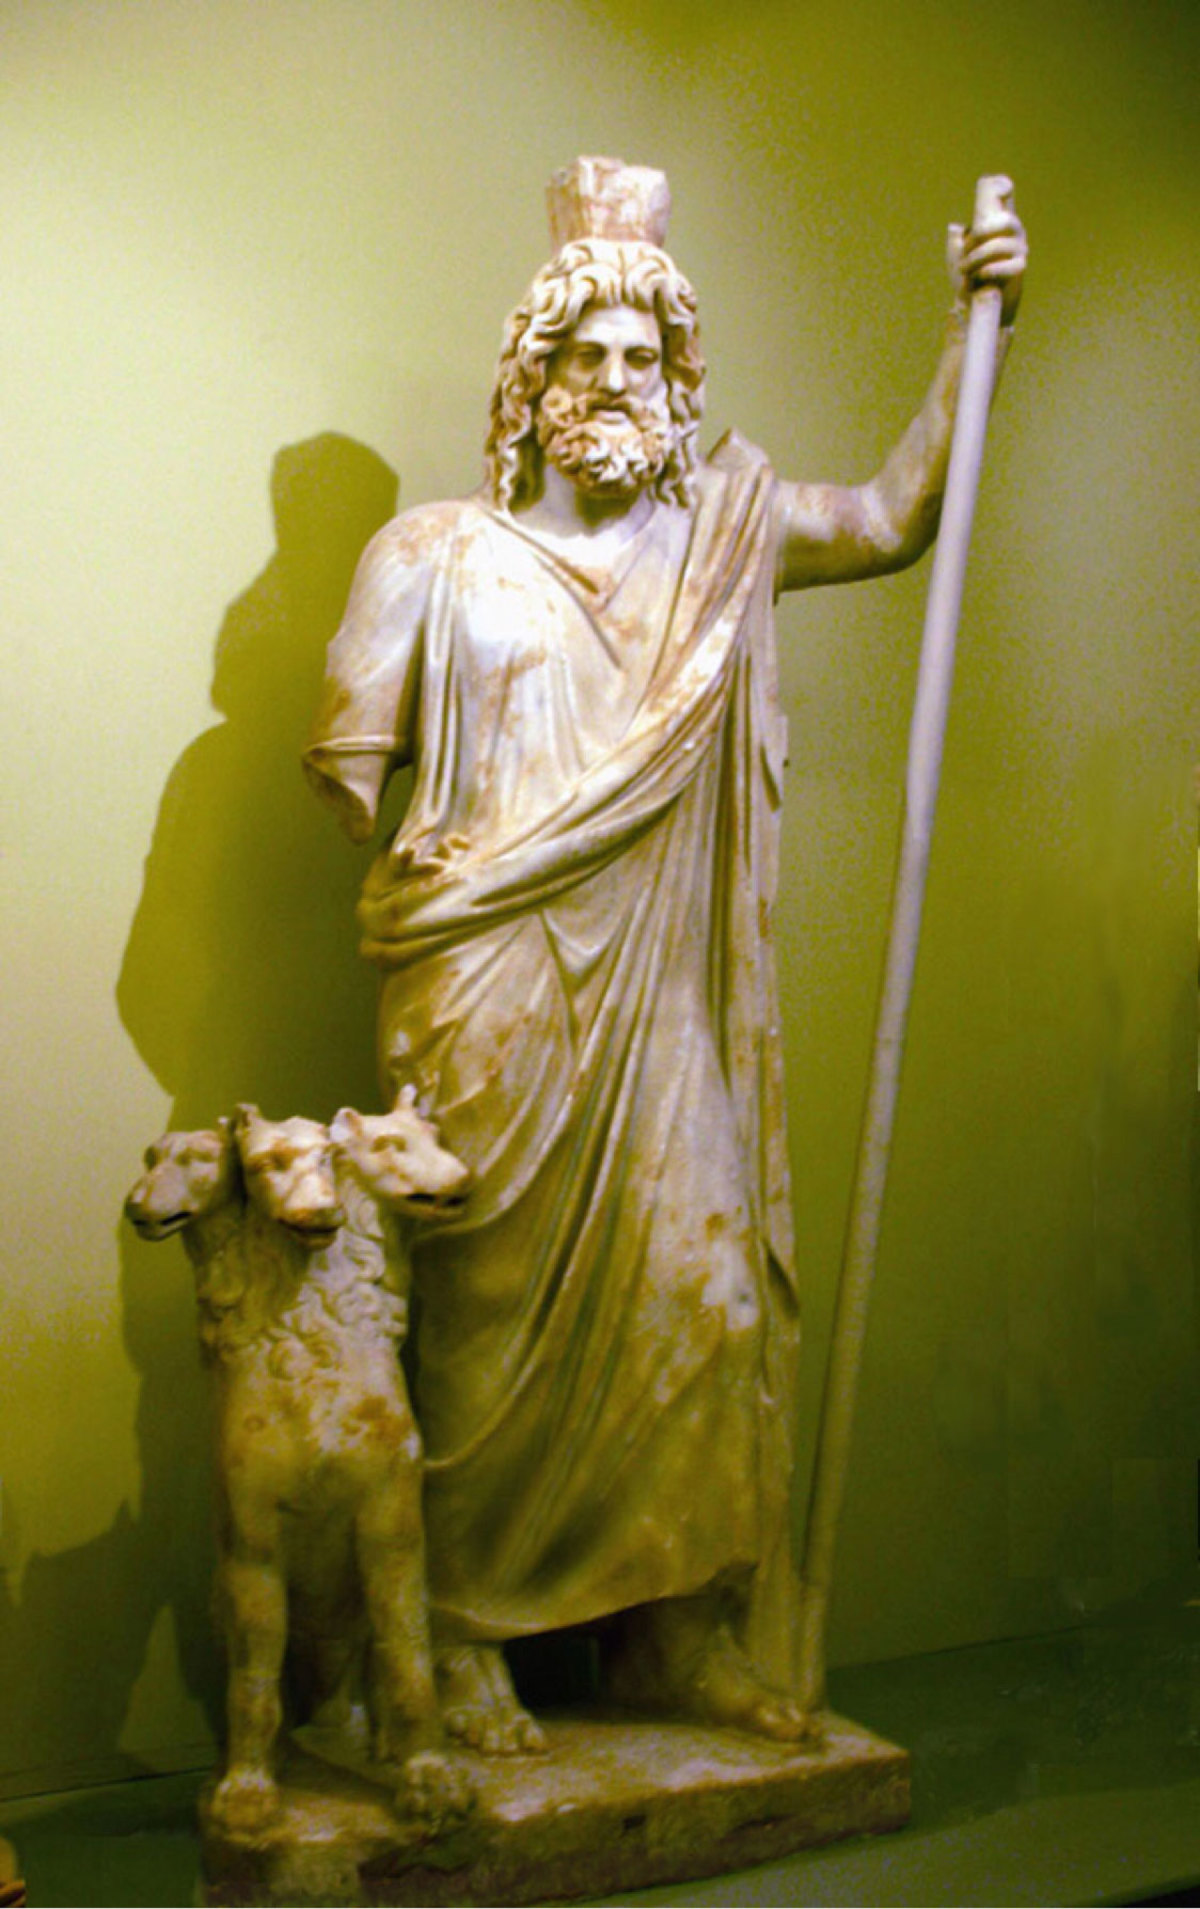 Estia Creations Hades sculpture cerberus ancient Greek God of the underworld statue